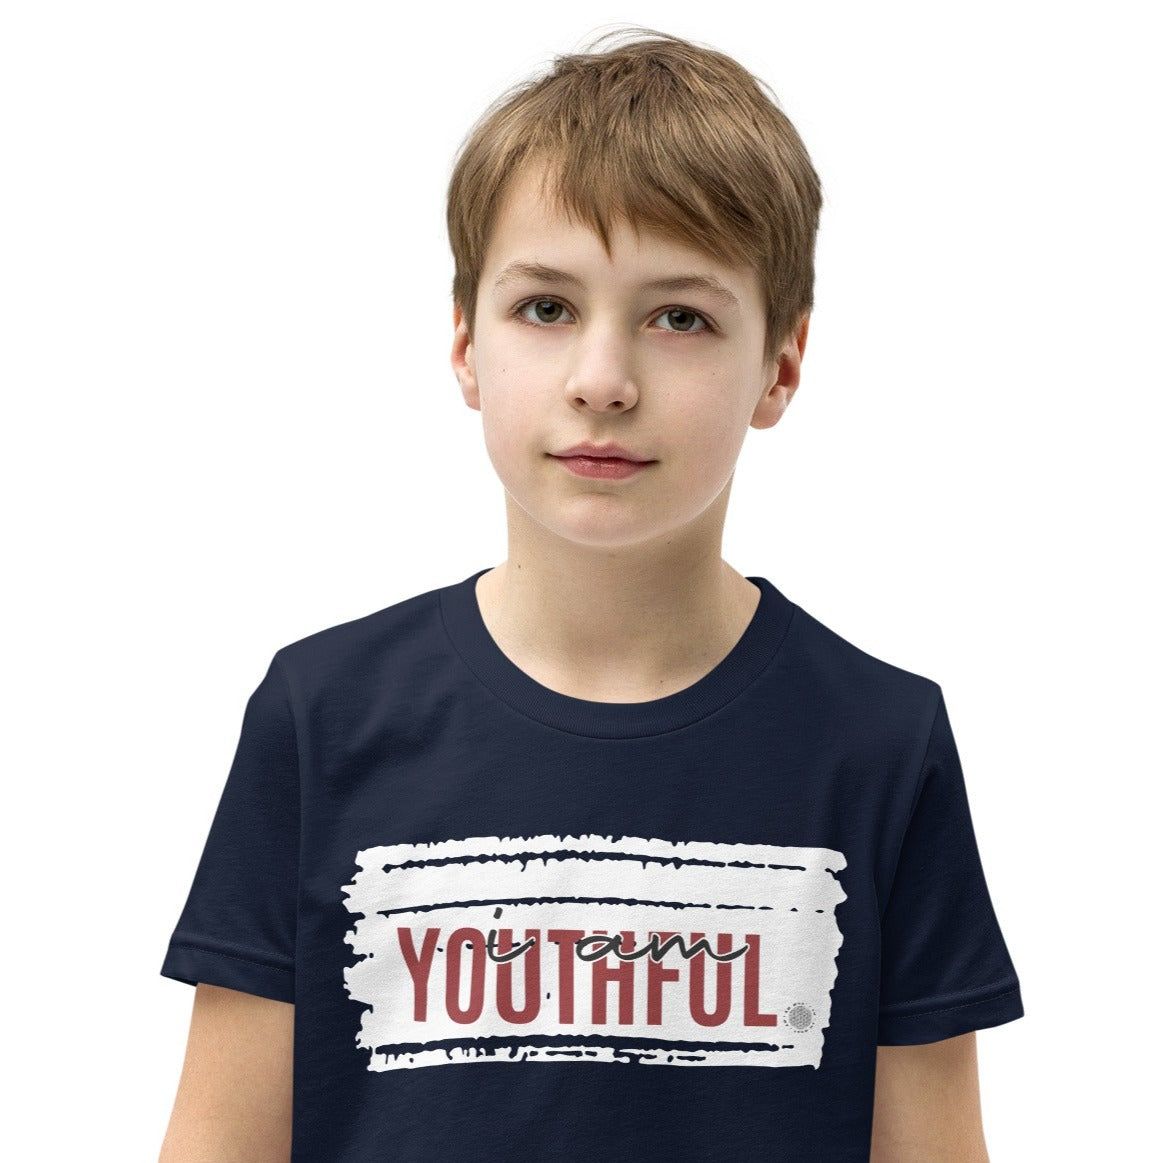 I Am Youthful Youth T-Shirt navy